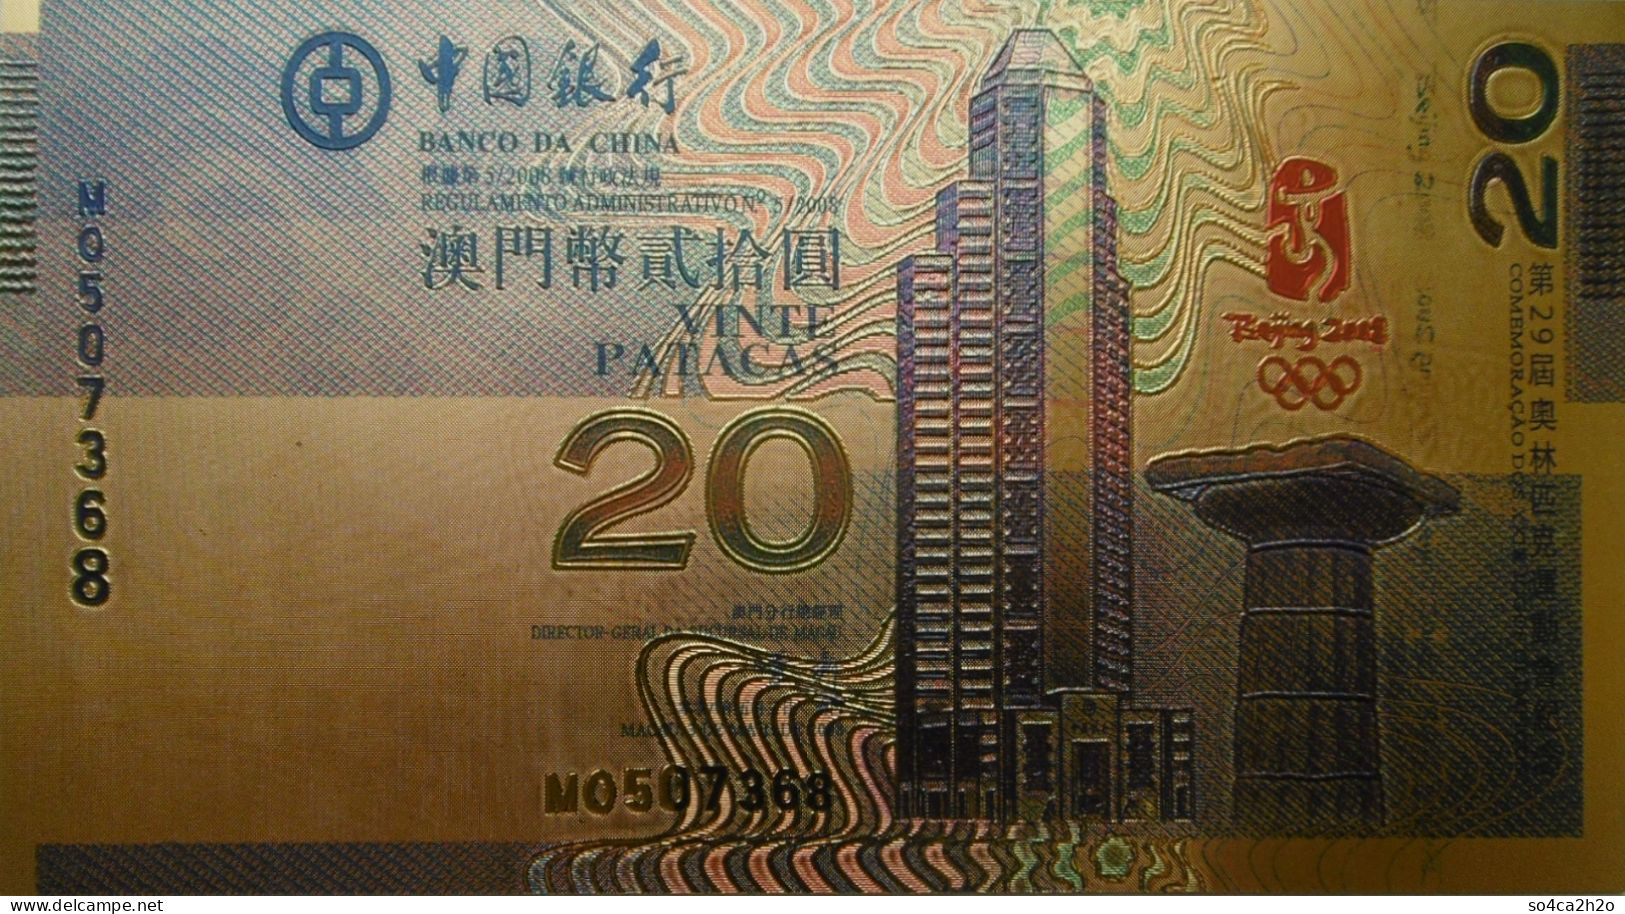 Macao Gold Banknotes Copie 20 Patacas  2008 P107a UNC Olympics Games - Macau